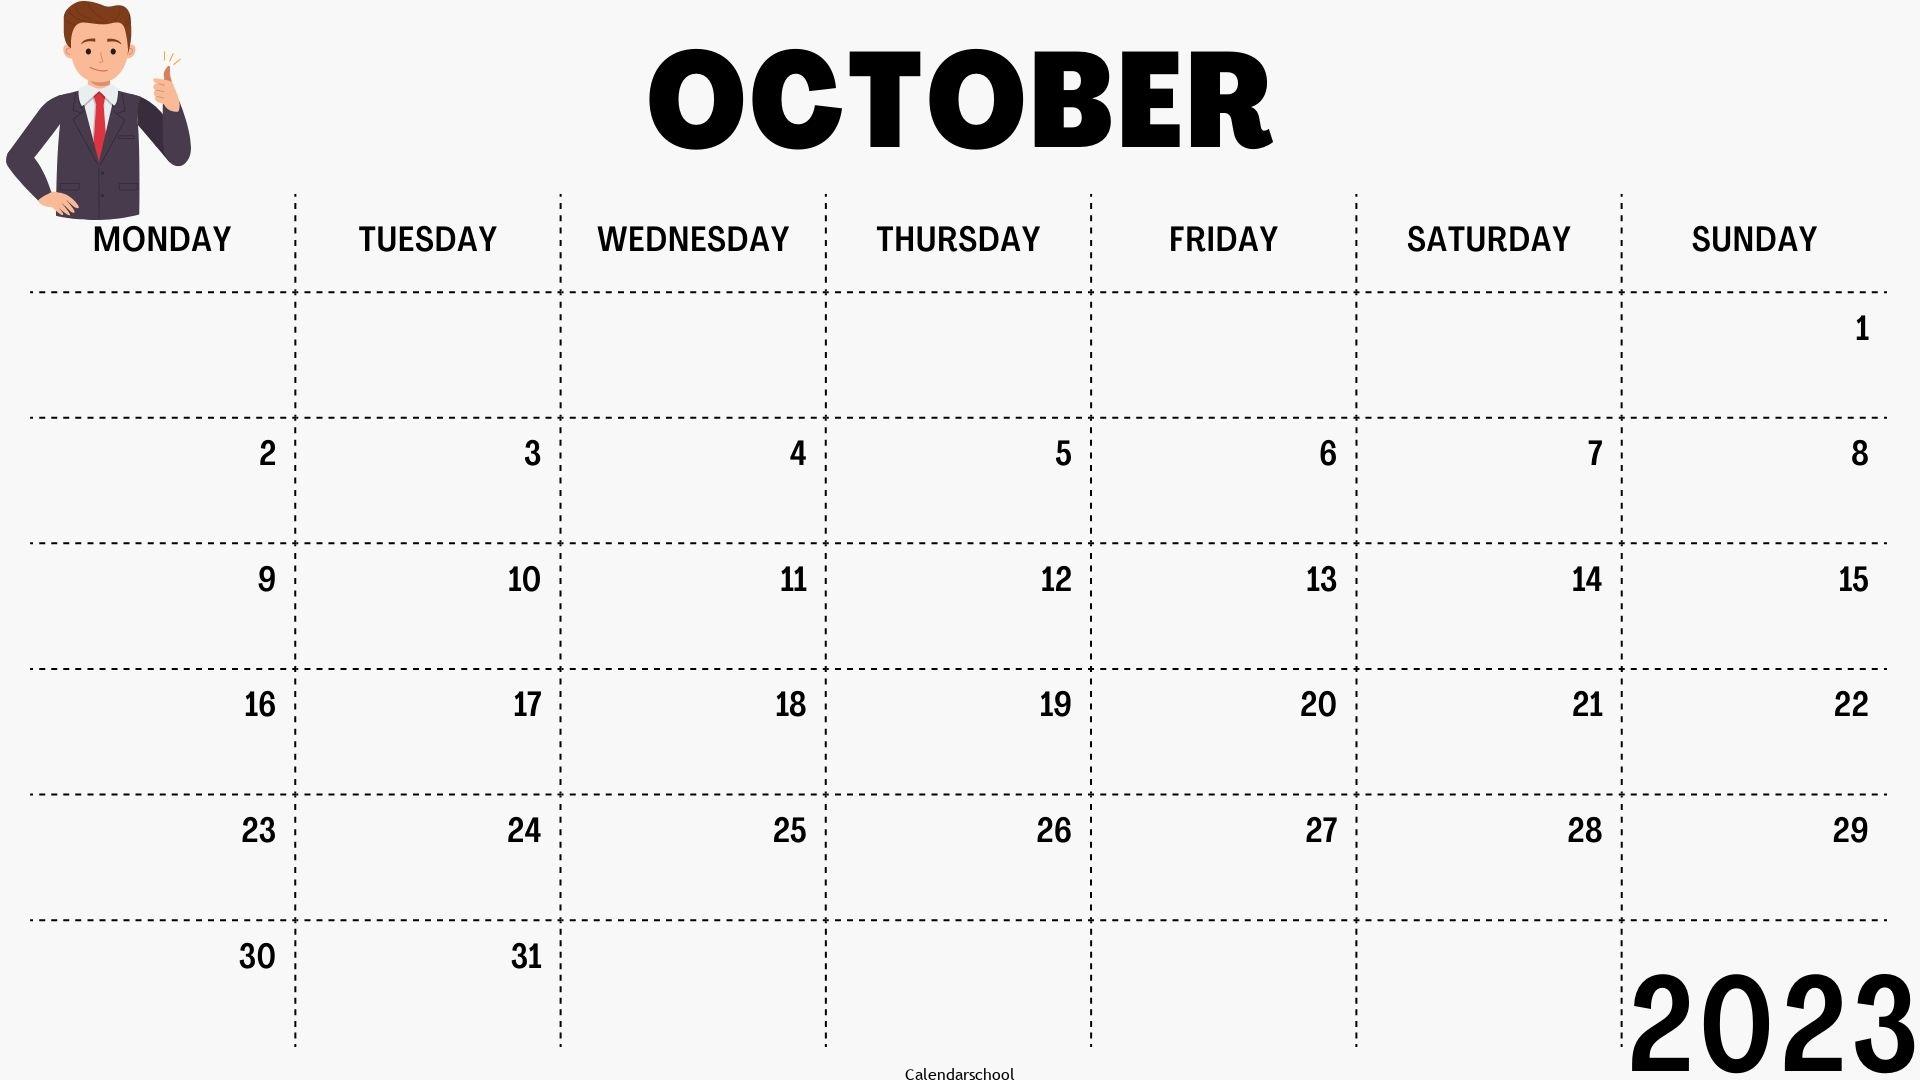 October 2023 Calendar With Holidays